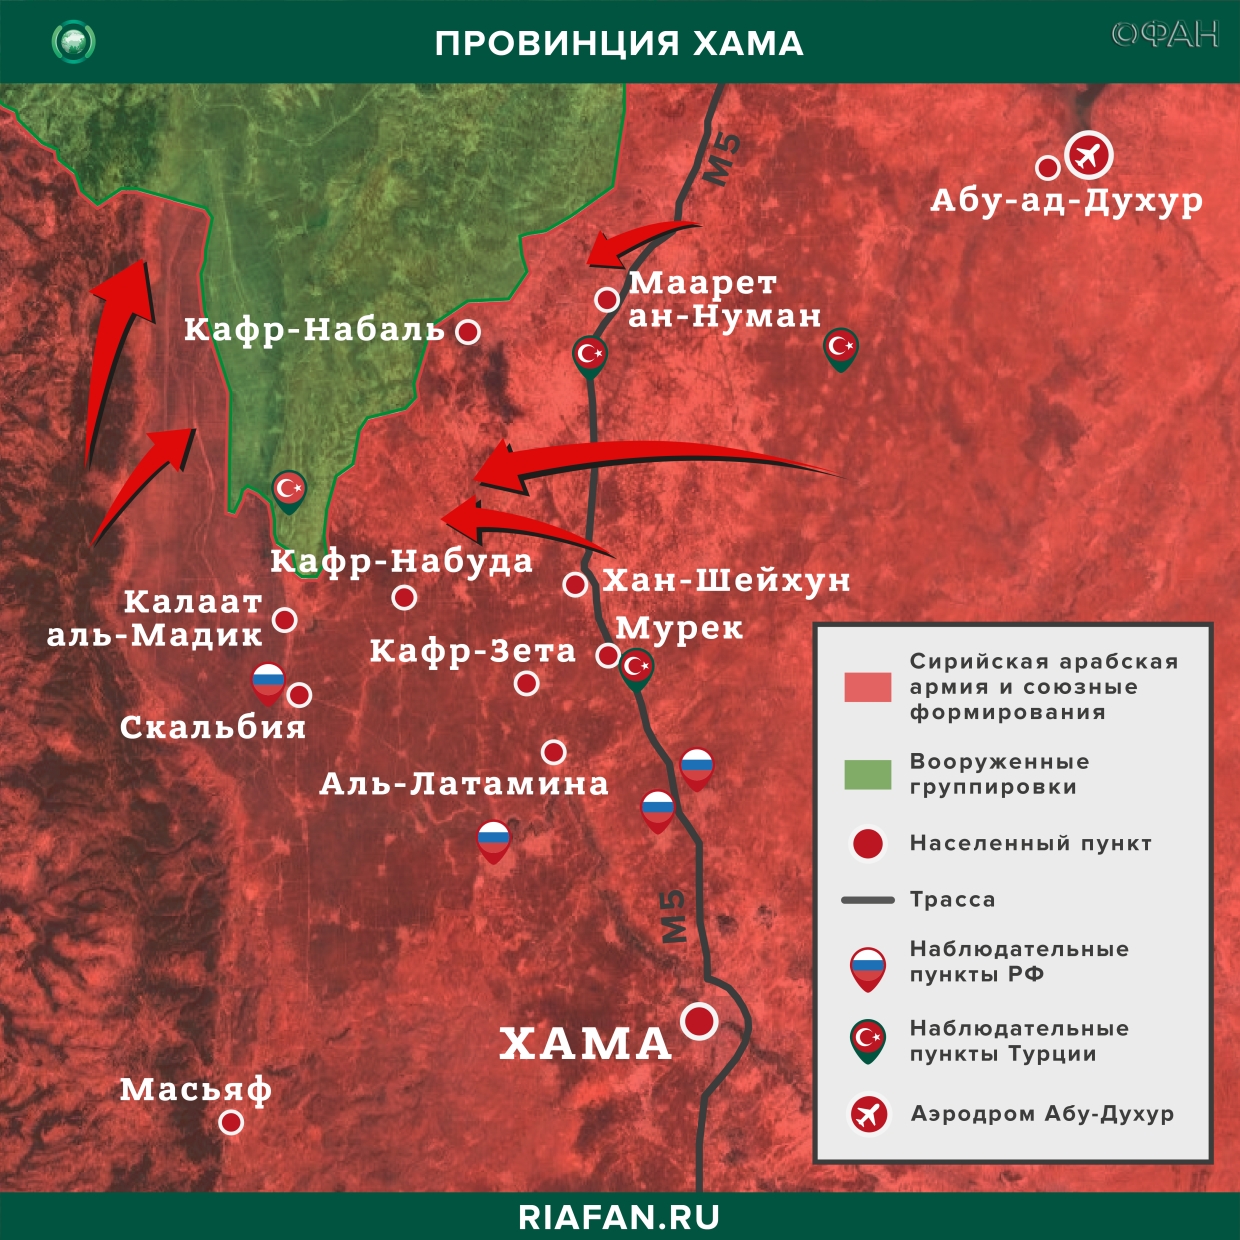 Syria news 2 Martha 07.00: pro-Turkish militants join the ranks in Hasaka, Syrian army shot down six UAVs Turkey